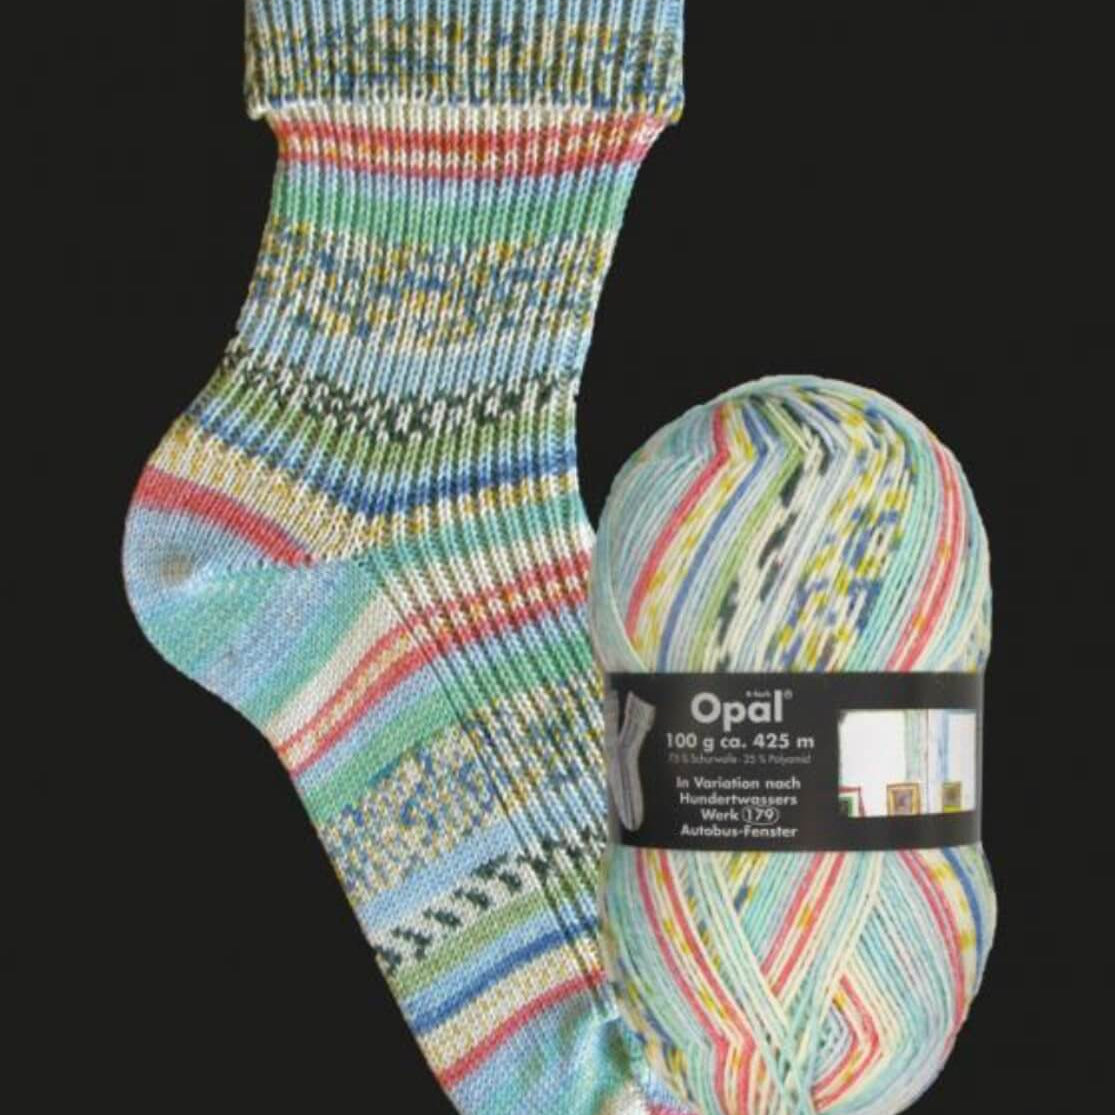 turquoise knitted sock in  multicoloured opal 4ply sock yarn wool inspired by the artist Hundertwasser